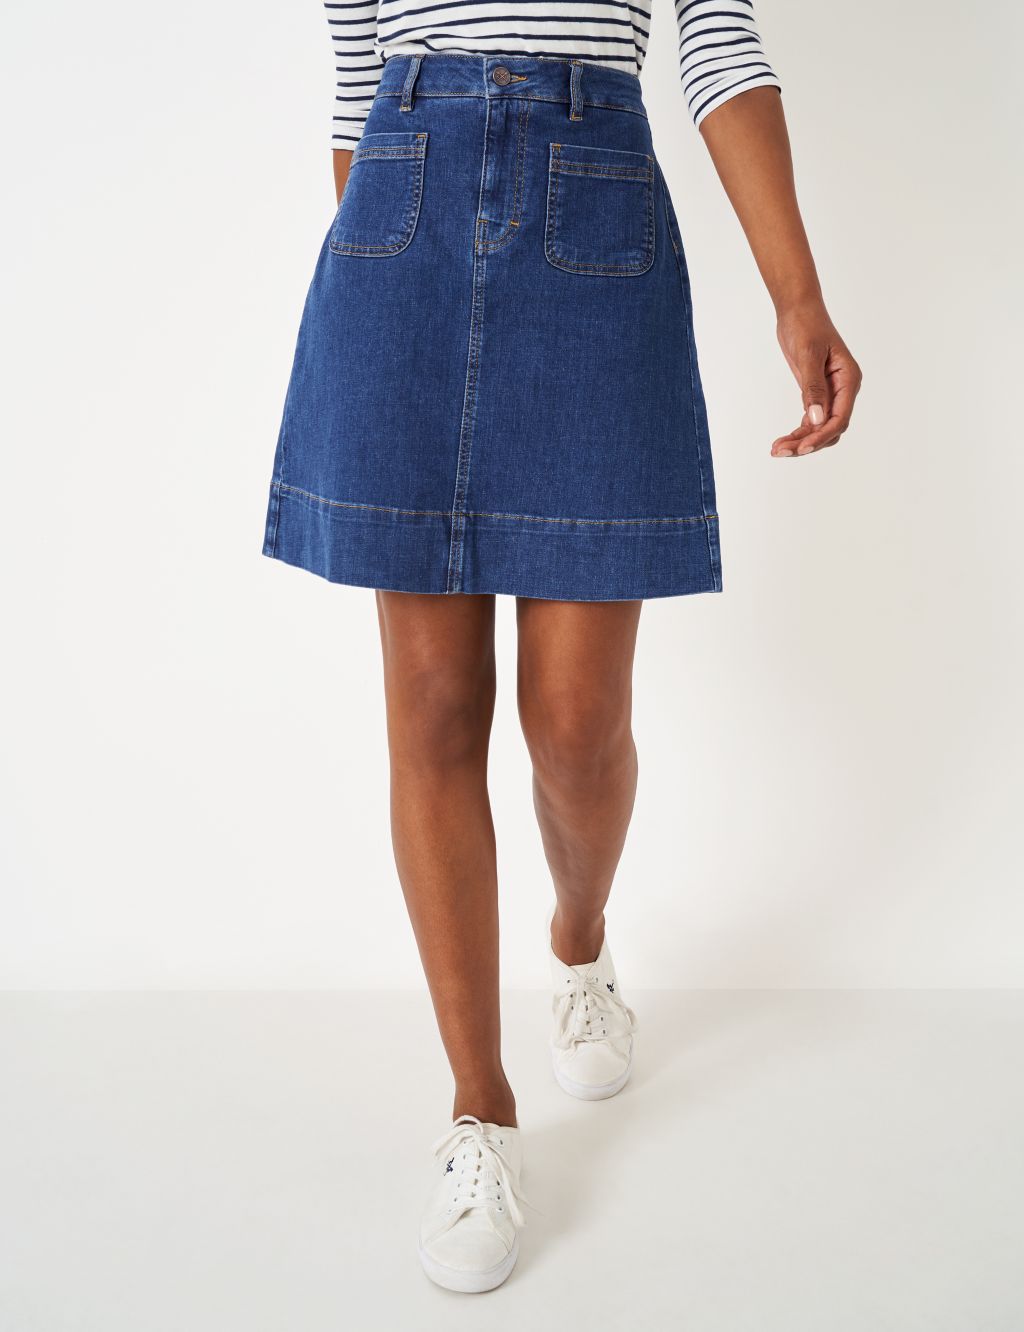 Denim Mini Skirt image 3